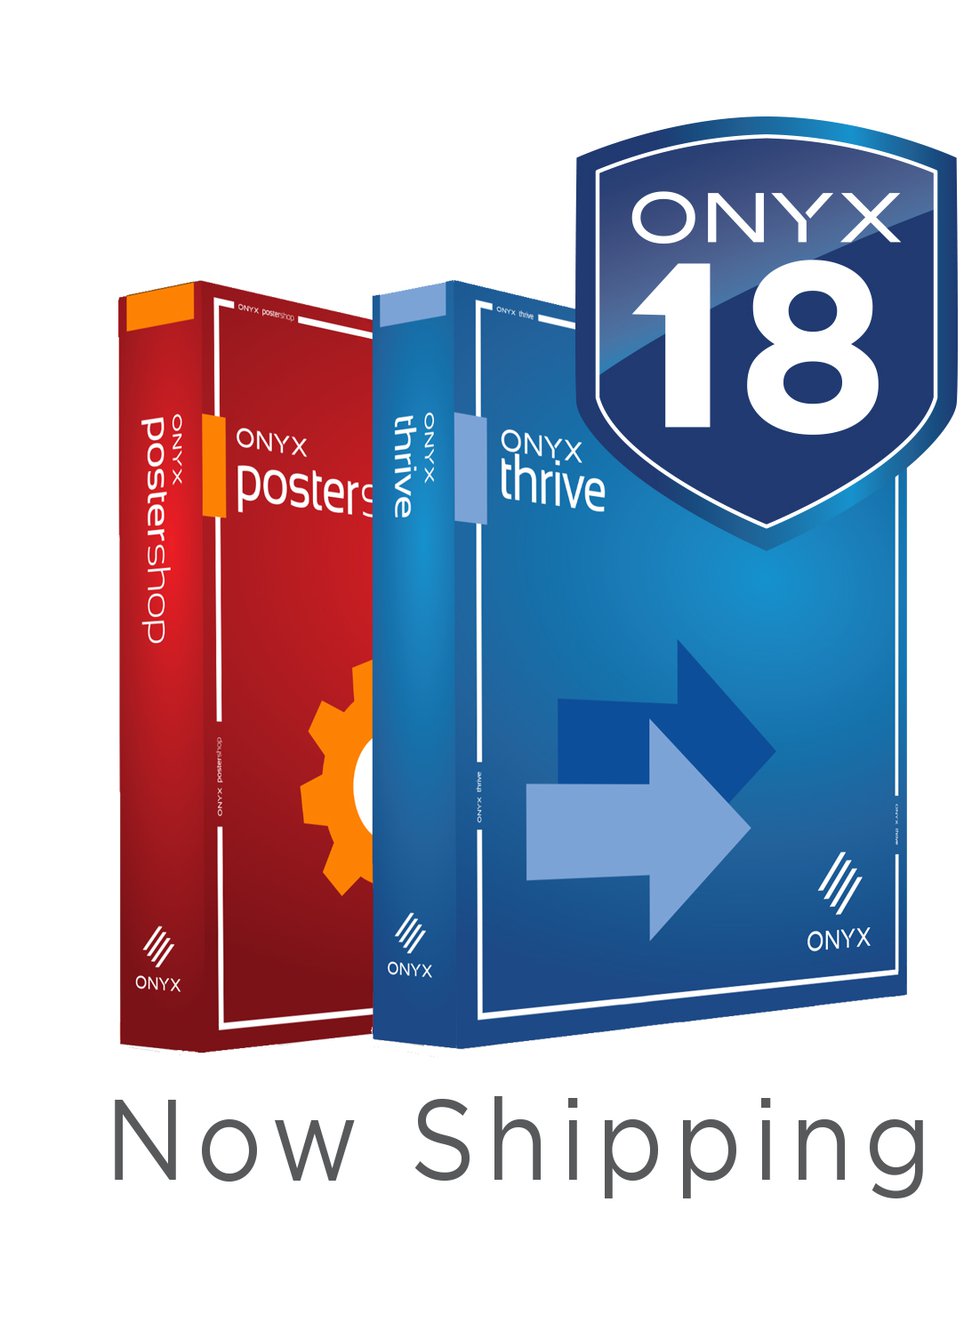 ONYX_18_Now_Shipping_4x5.jpg